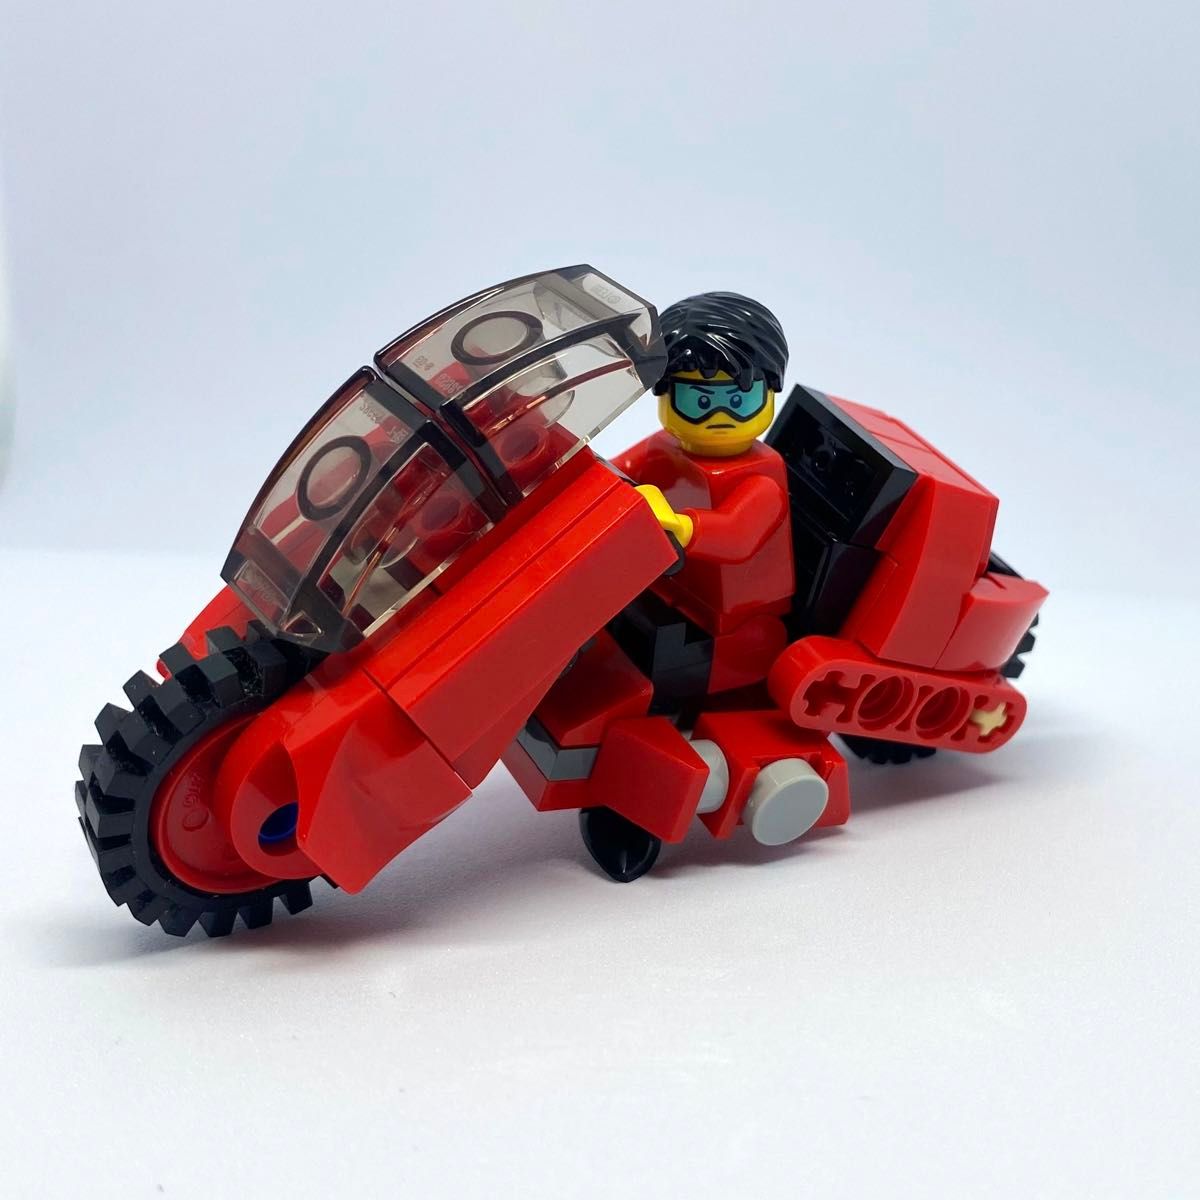 LEGO AKIRA 金田バイク 自作品 レゴ KANEDAミニフィグ付